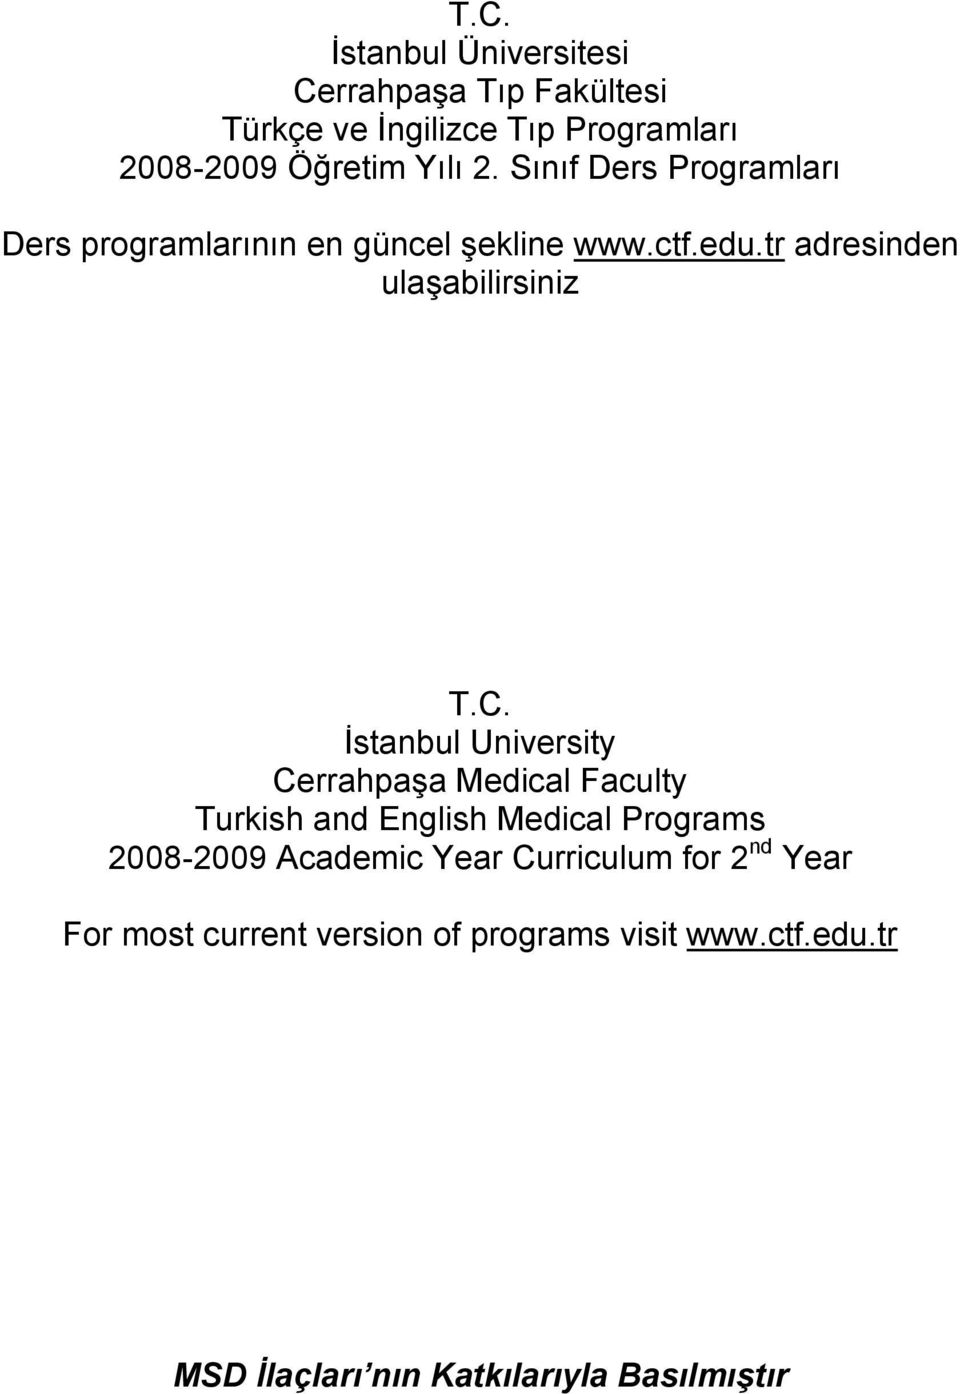 İstanbul University Cerrahpaşa Medical Faculty Turkish and English Medical Programs 2008-2009 Academic Year